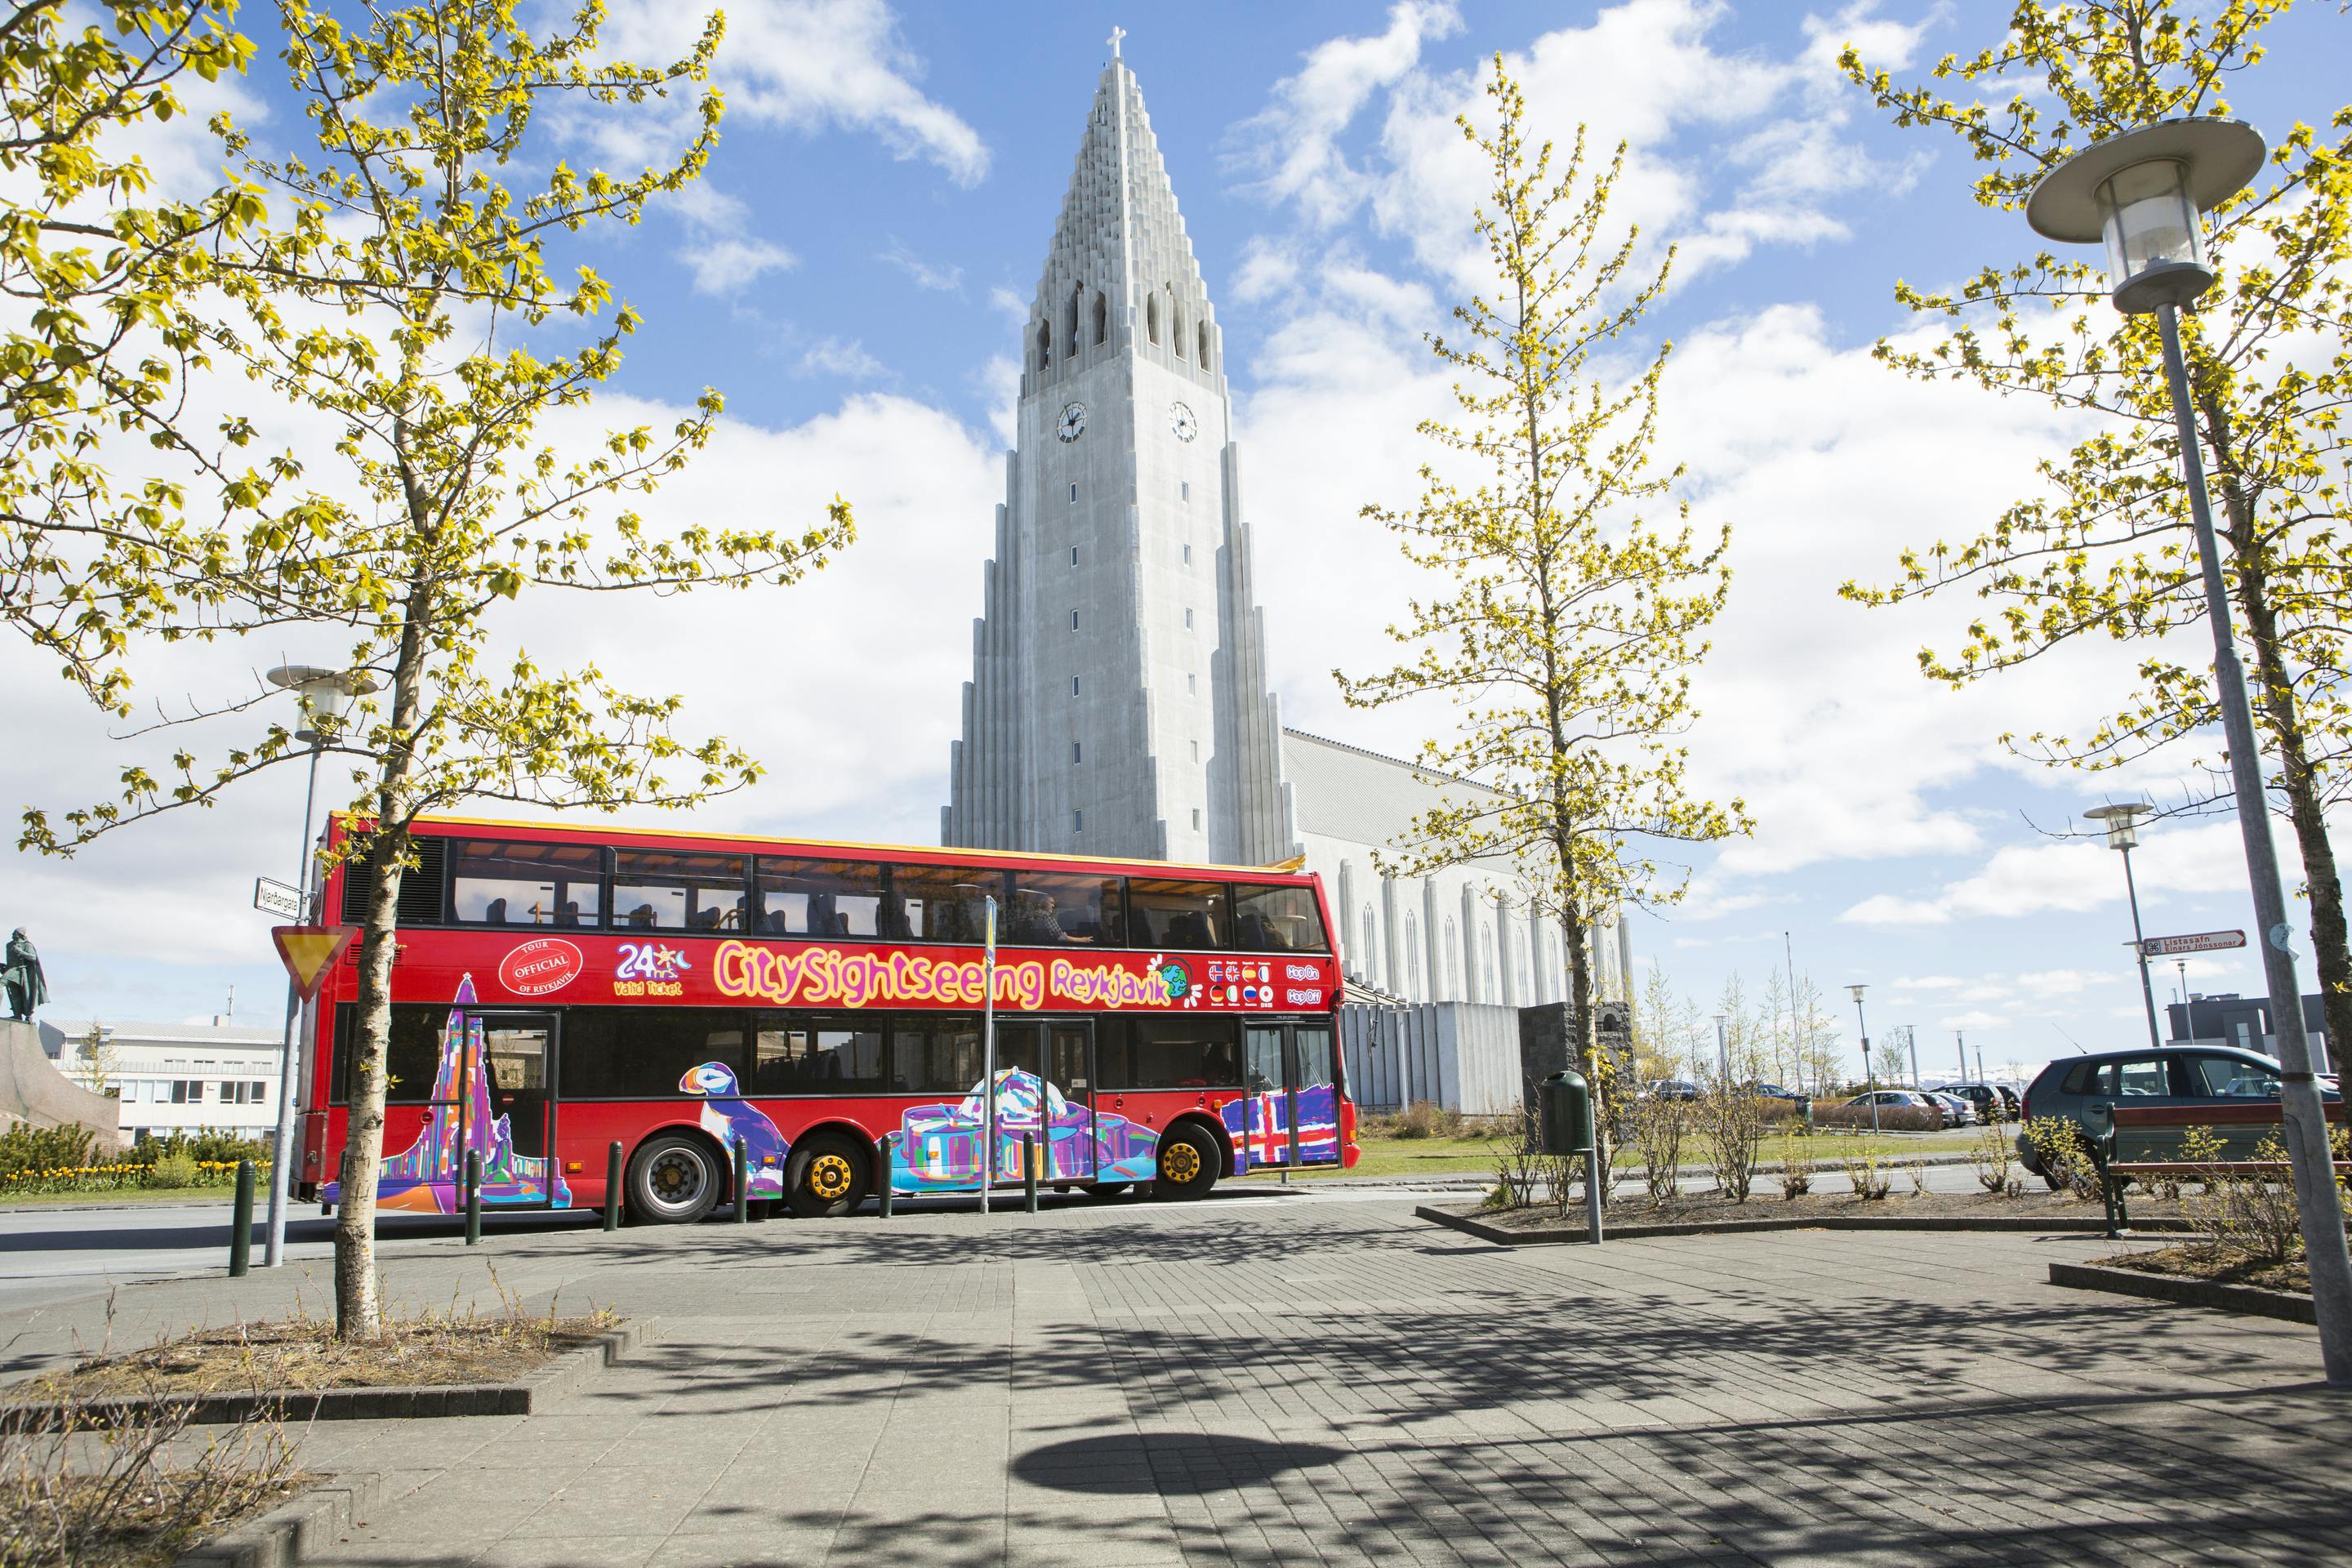 City Sightseeing hop-on hop-off bus tour of Reykjavik